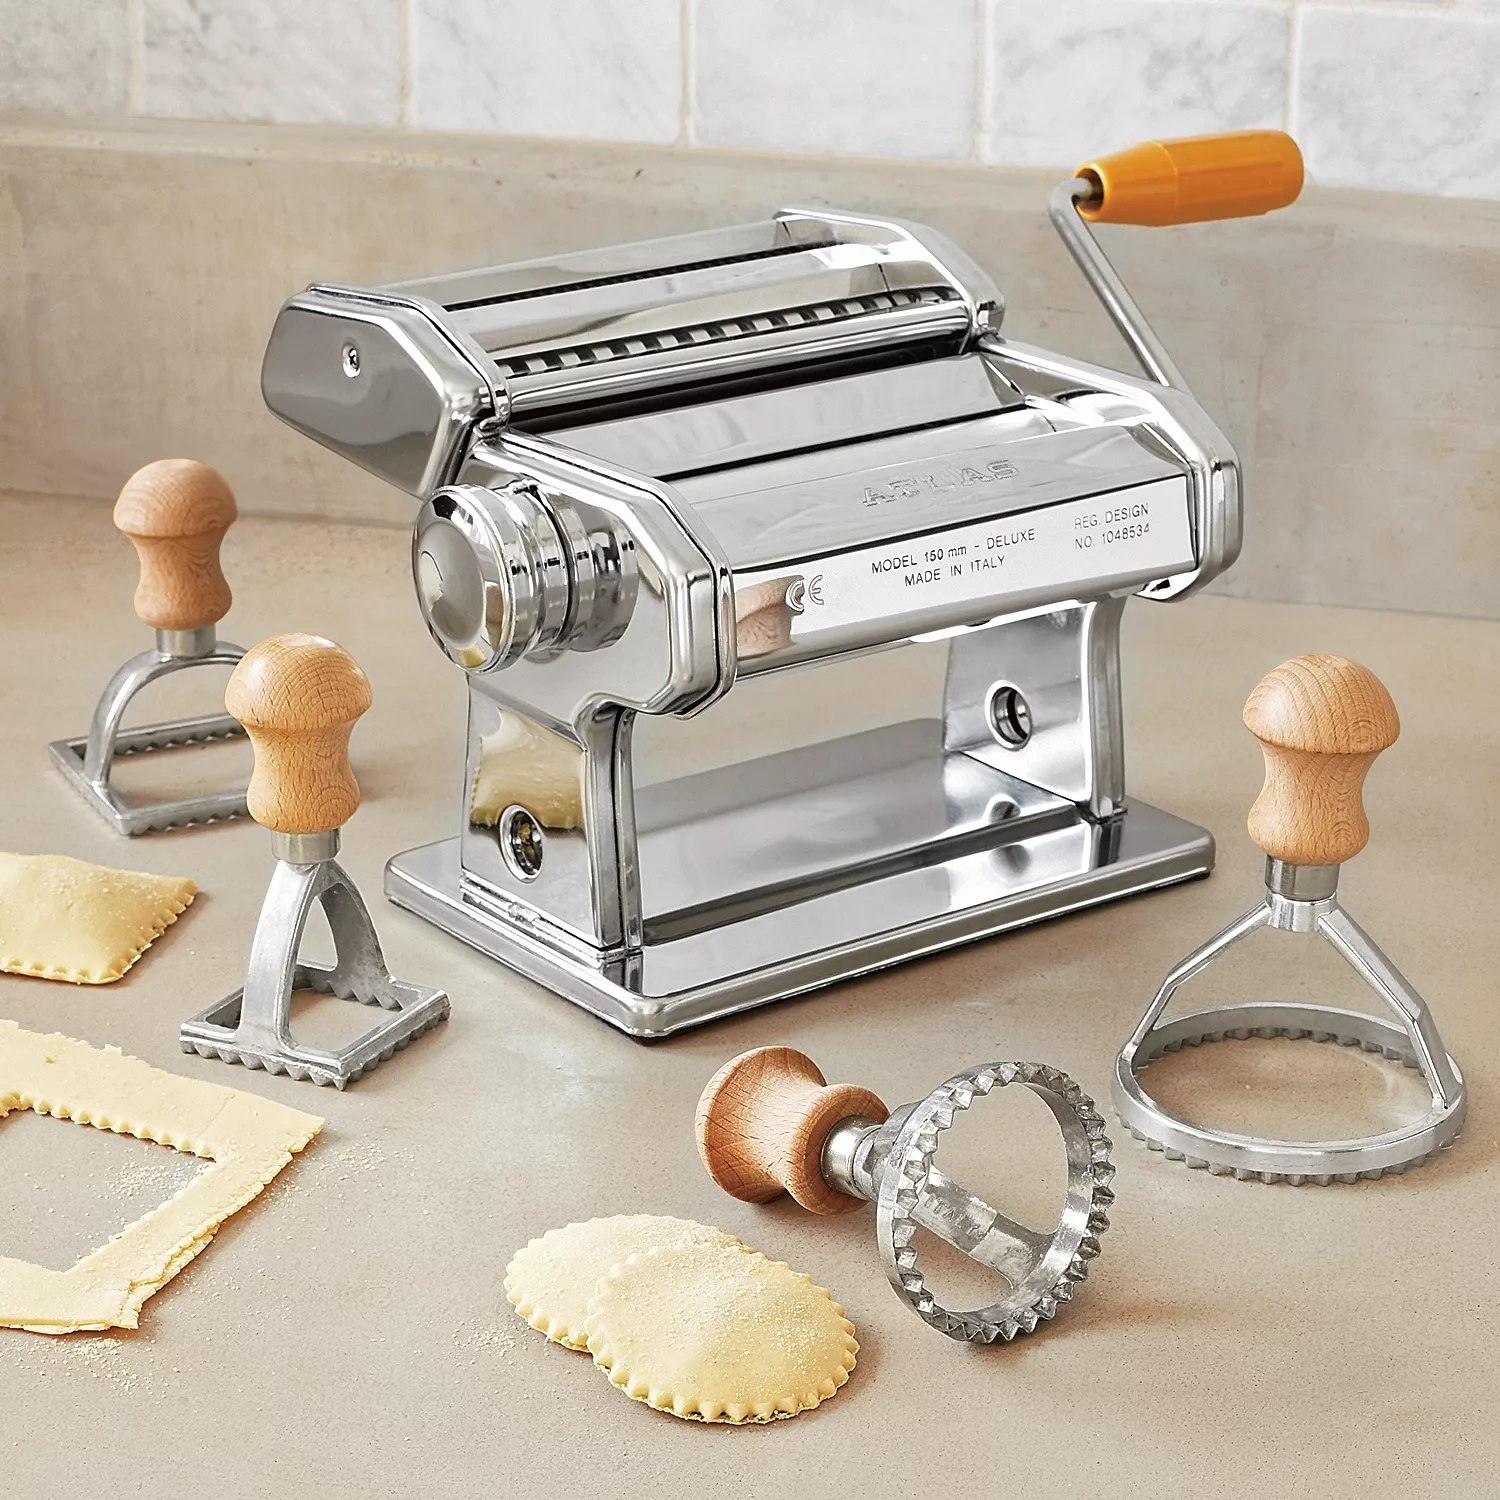 Imperia Pasta Maker Machine- Deluxe 11 Piece Set w Machine